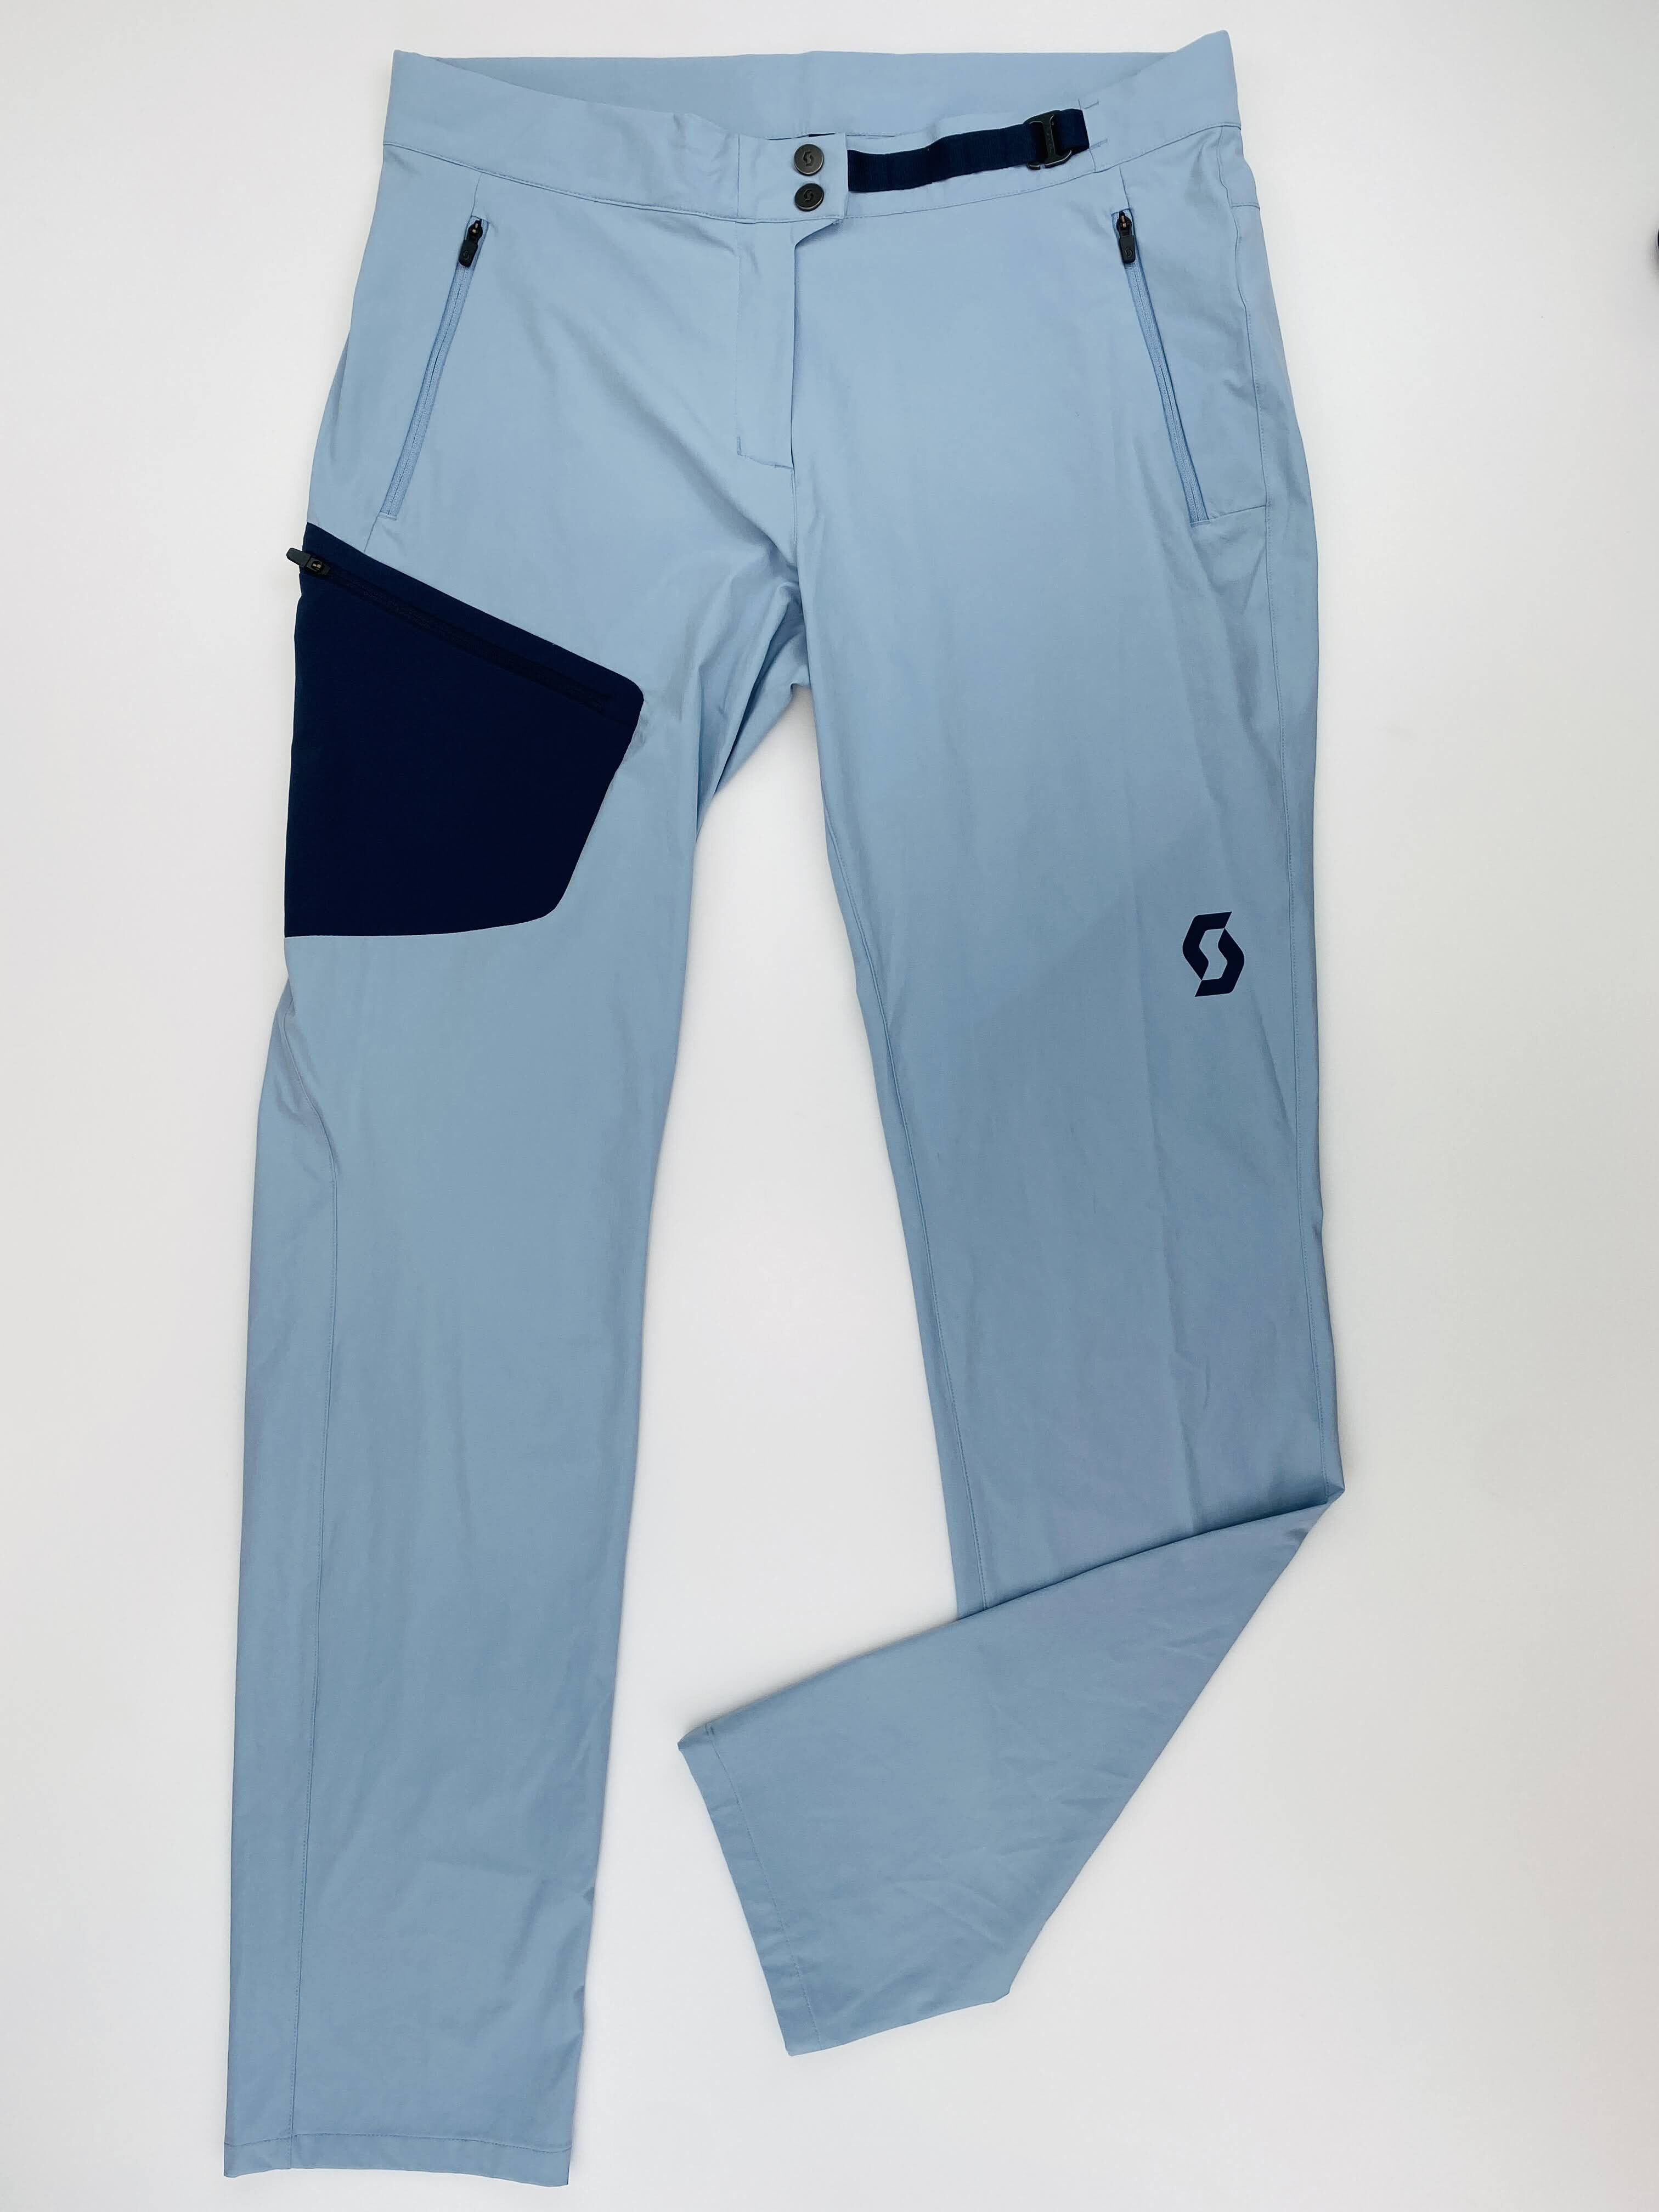 Scott Pant W'S Explorair Light - Seconde main Pantalon randonnée femme - Bleu - L | Hardloop